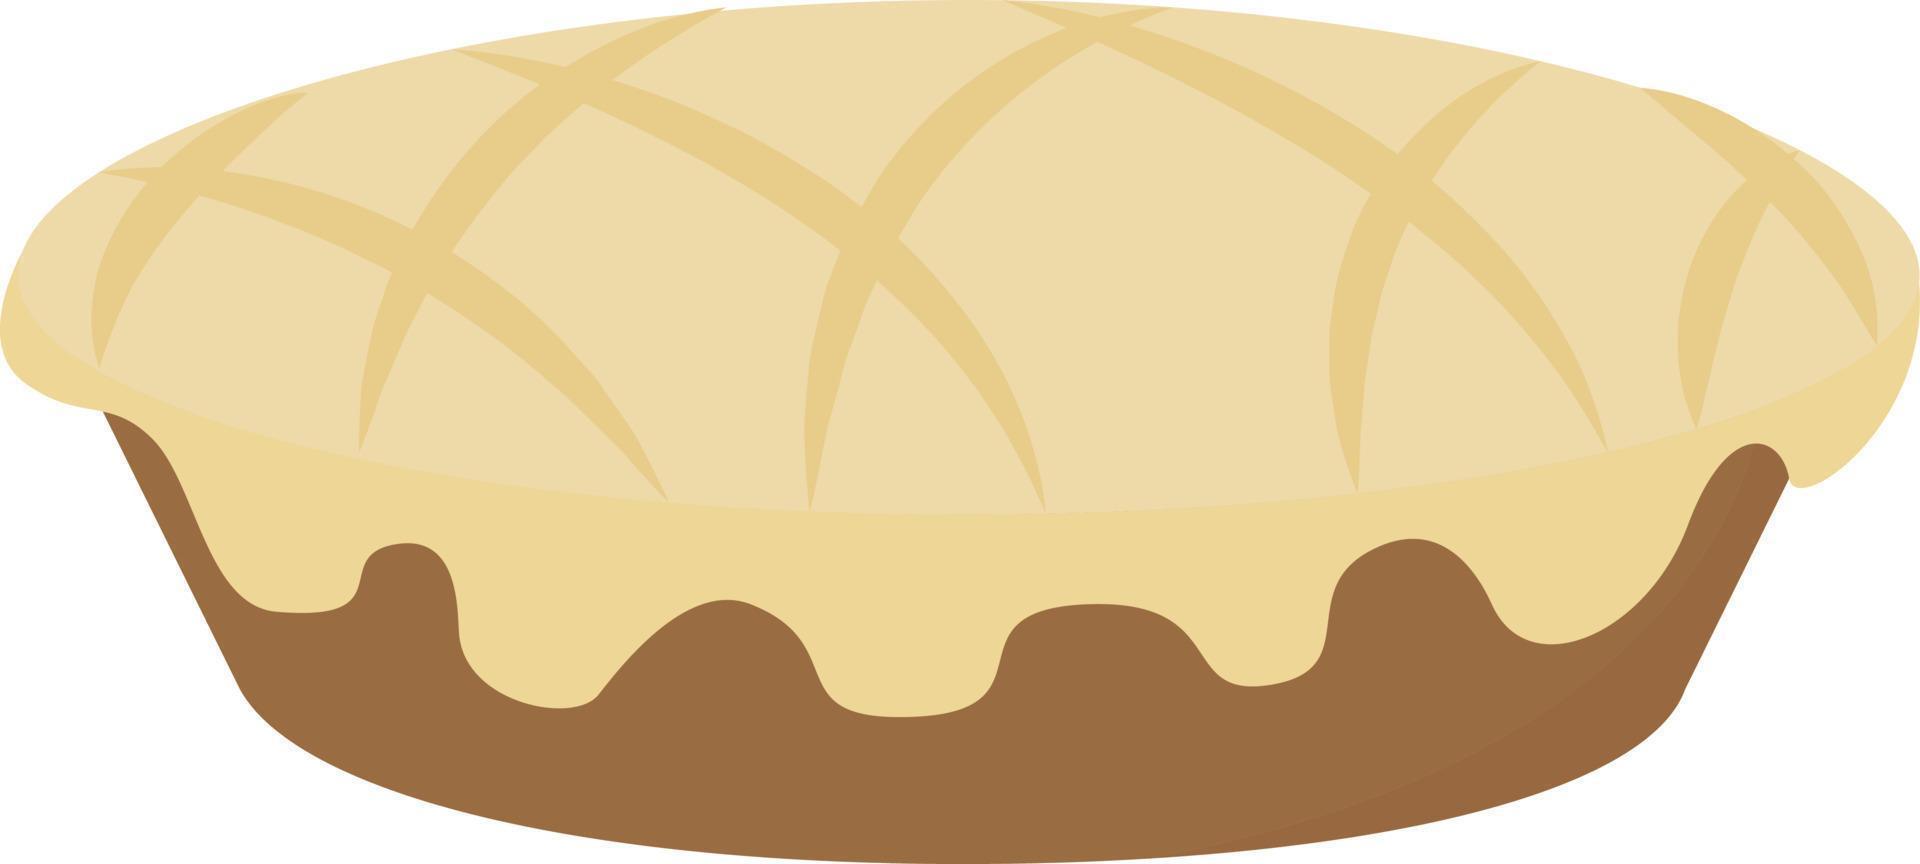 tarta de manzana, ilustración, vector sobre fondo blanco.